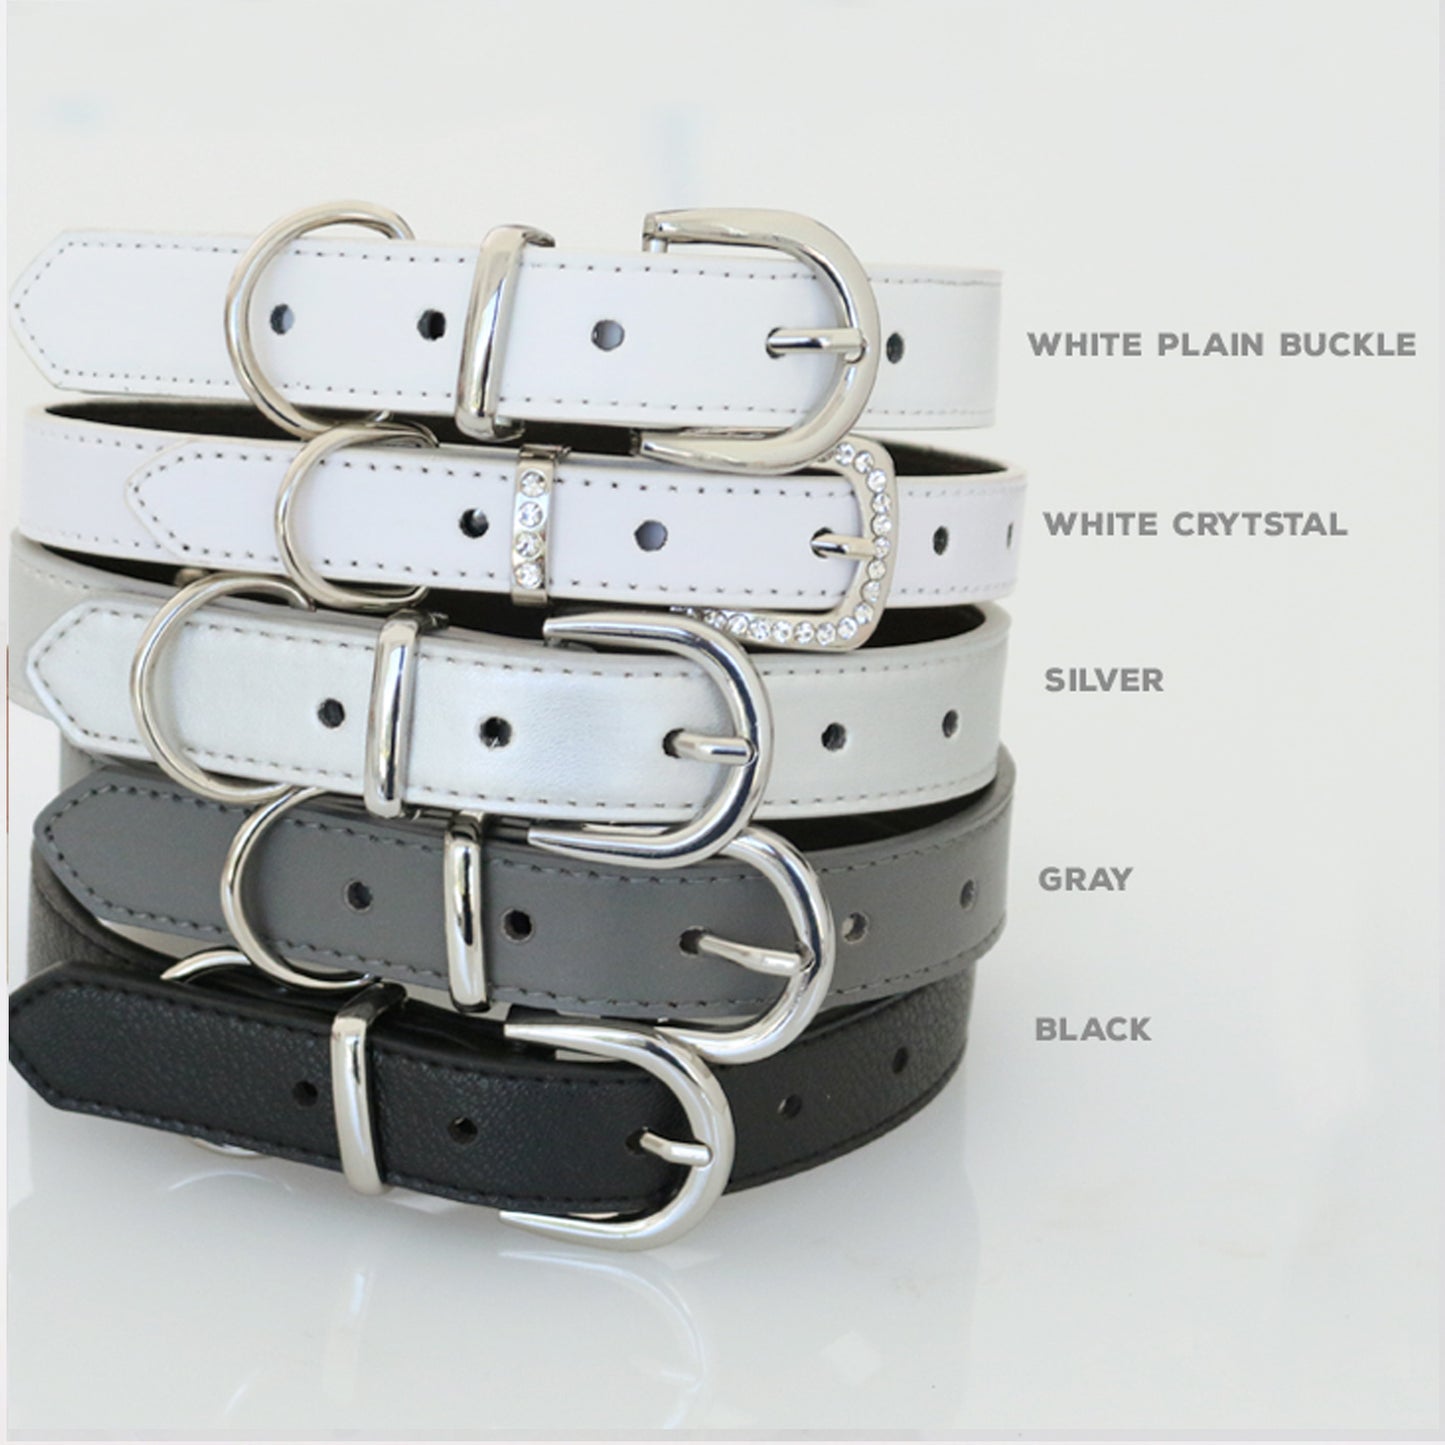 Black dog bow tie Collar- Leather dog collar - Pet wedding accessory , Wedding dog collar